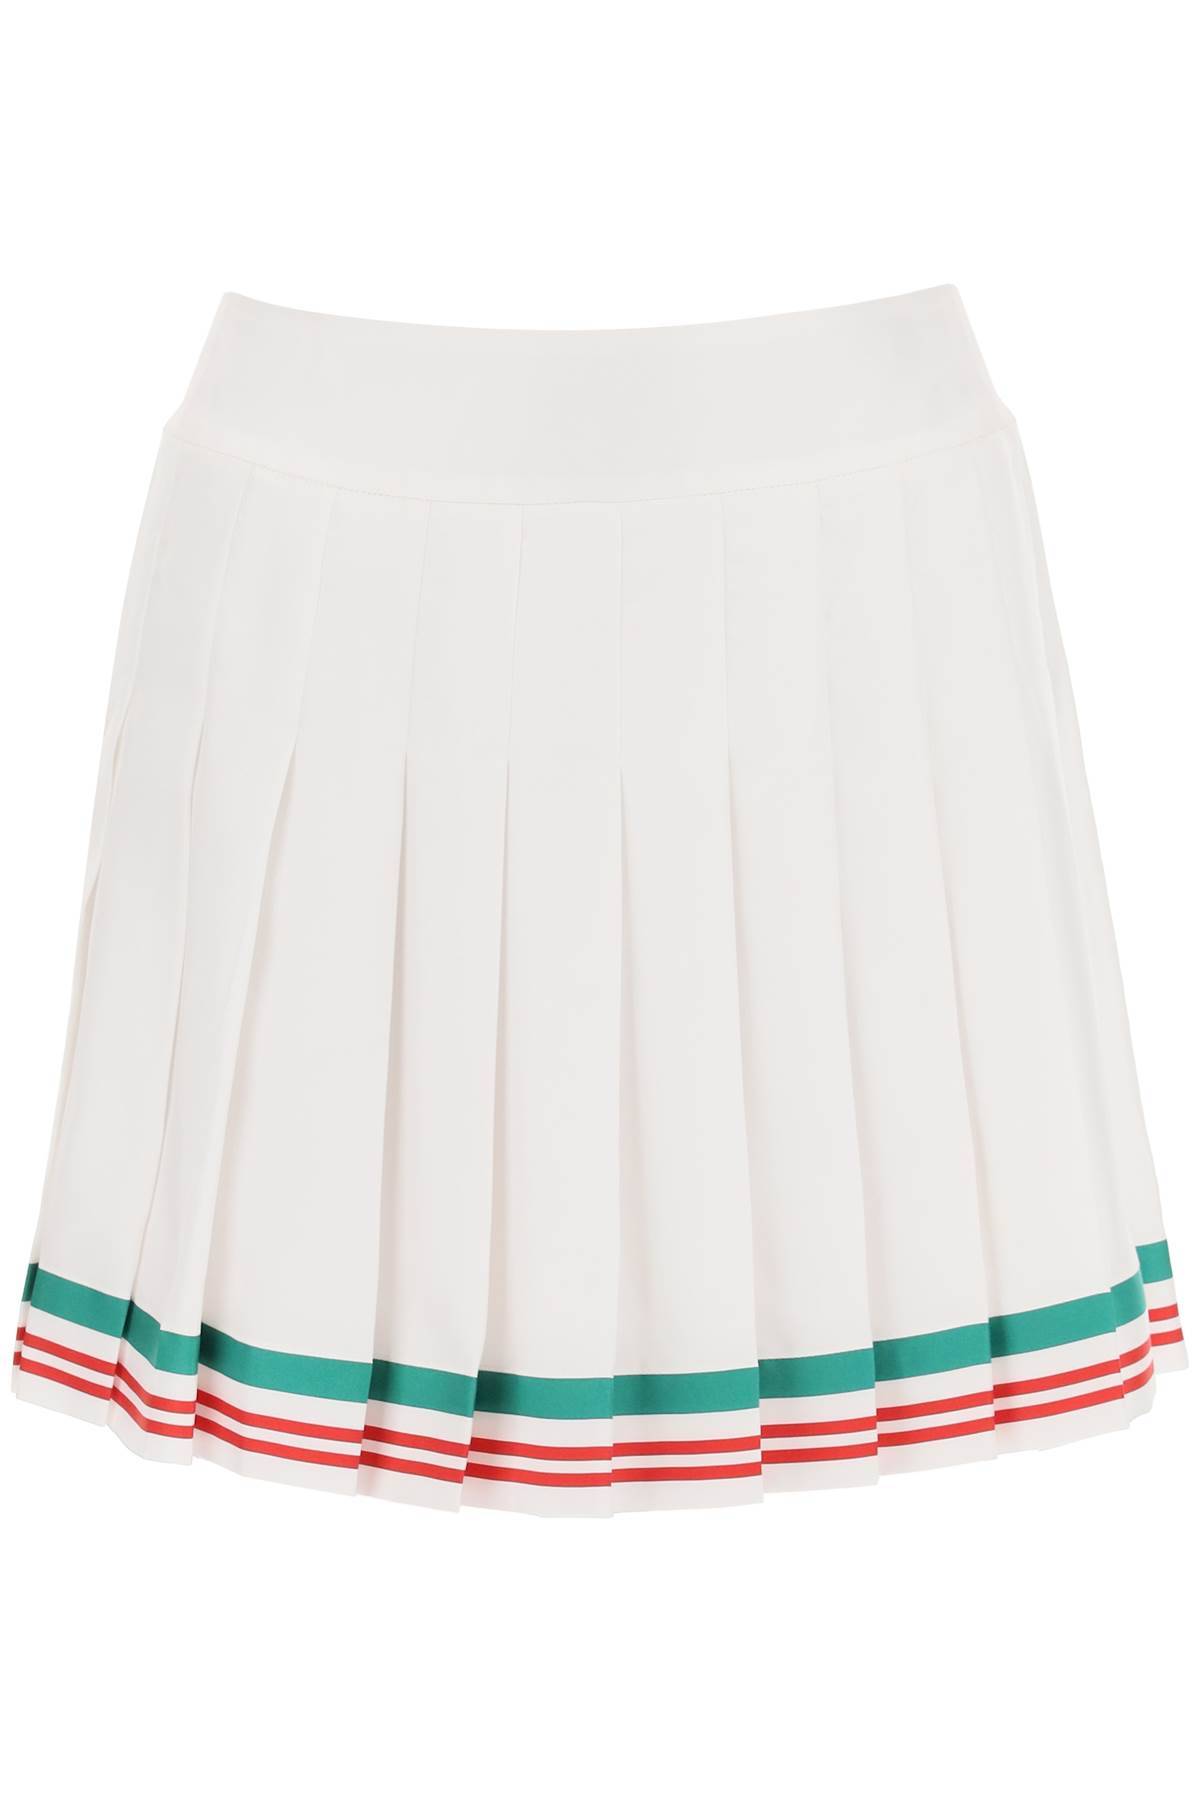 Casablanca CASABLANCA casaway tennis mini skirt